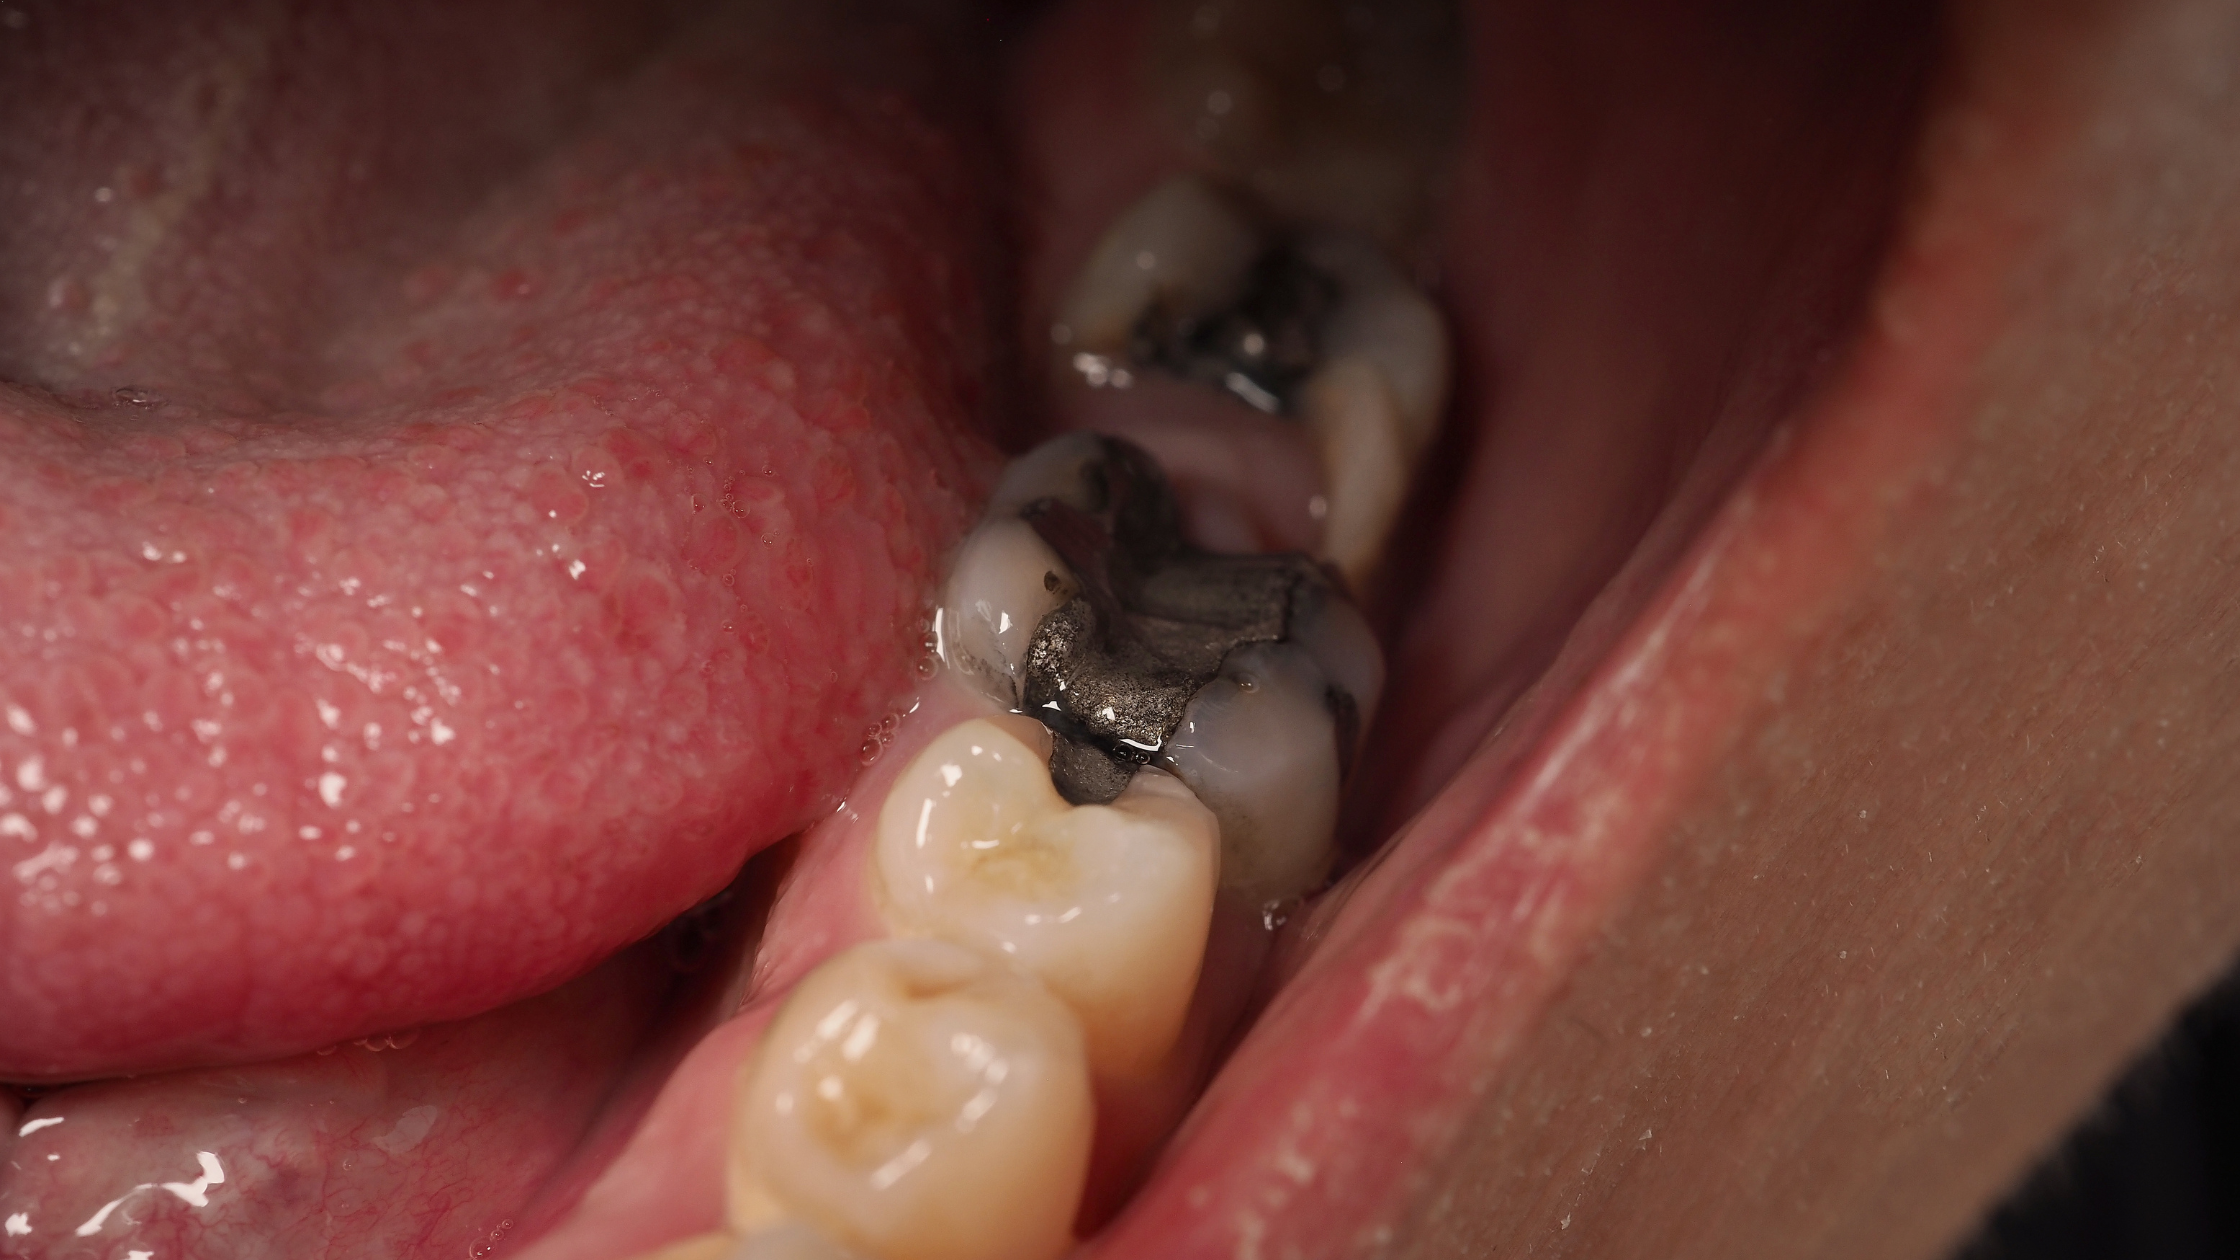 An image of dental amalgam fillings